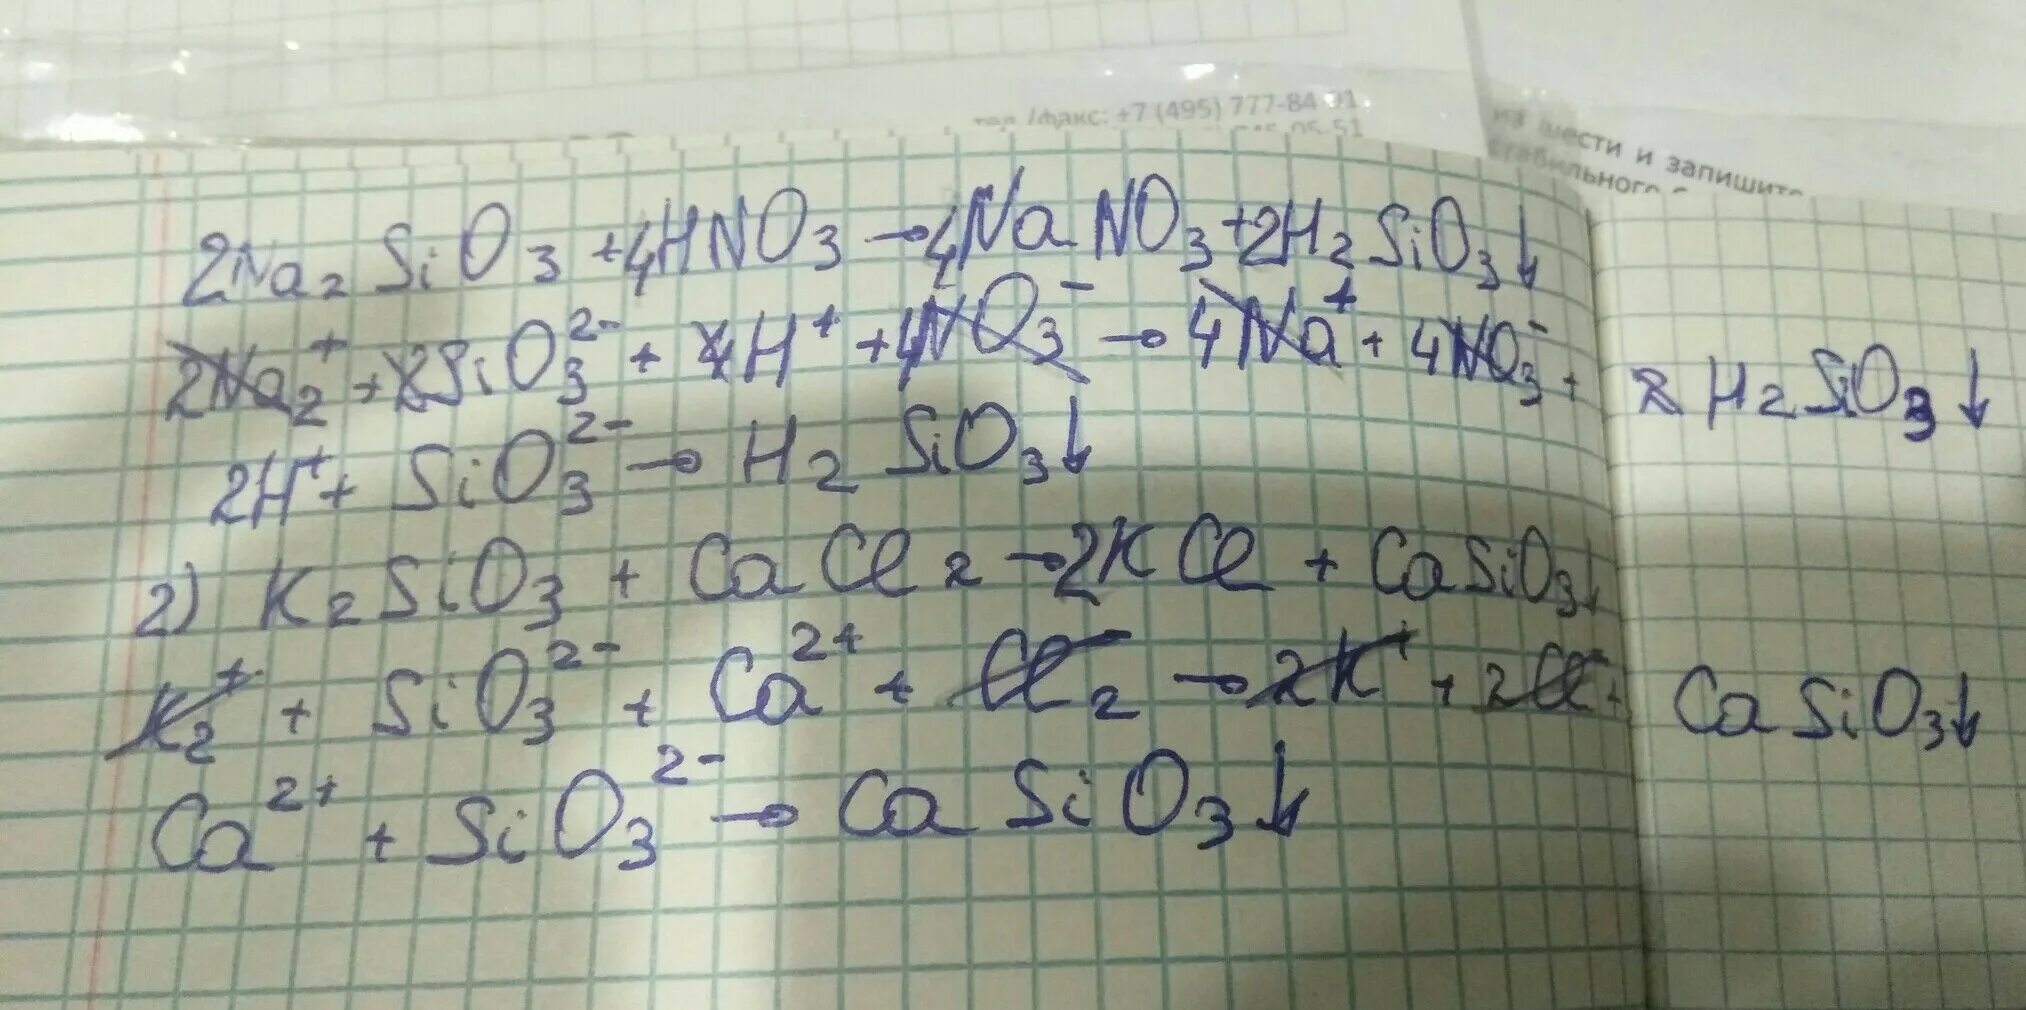 Na2sio3 hno3. K2sio3+hno3. Na2sio3 hno3 уравнение. Na2sio3 + hno3 ионное уравнение.